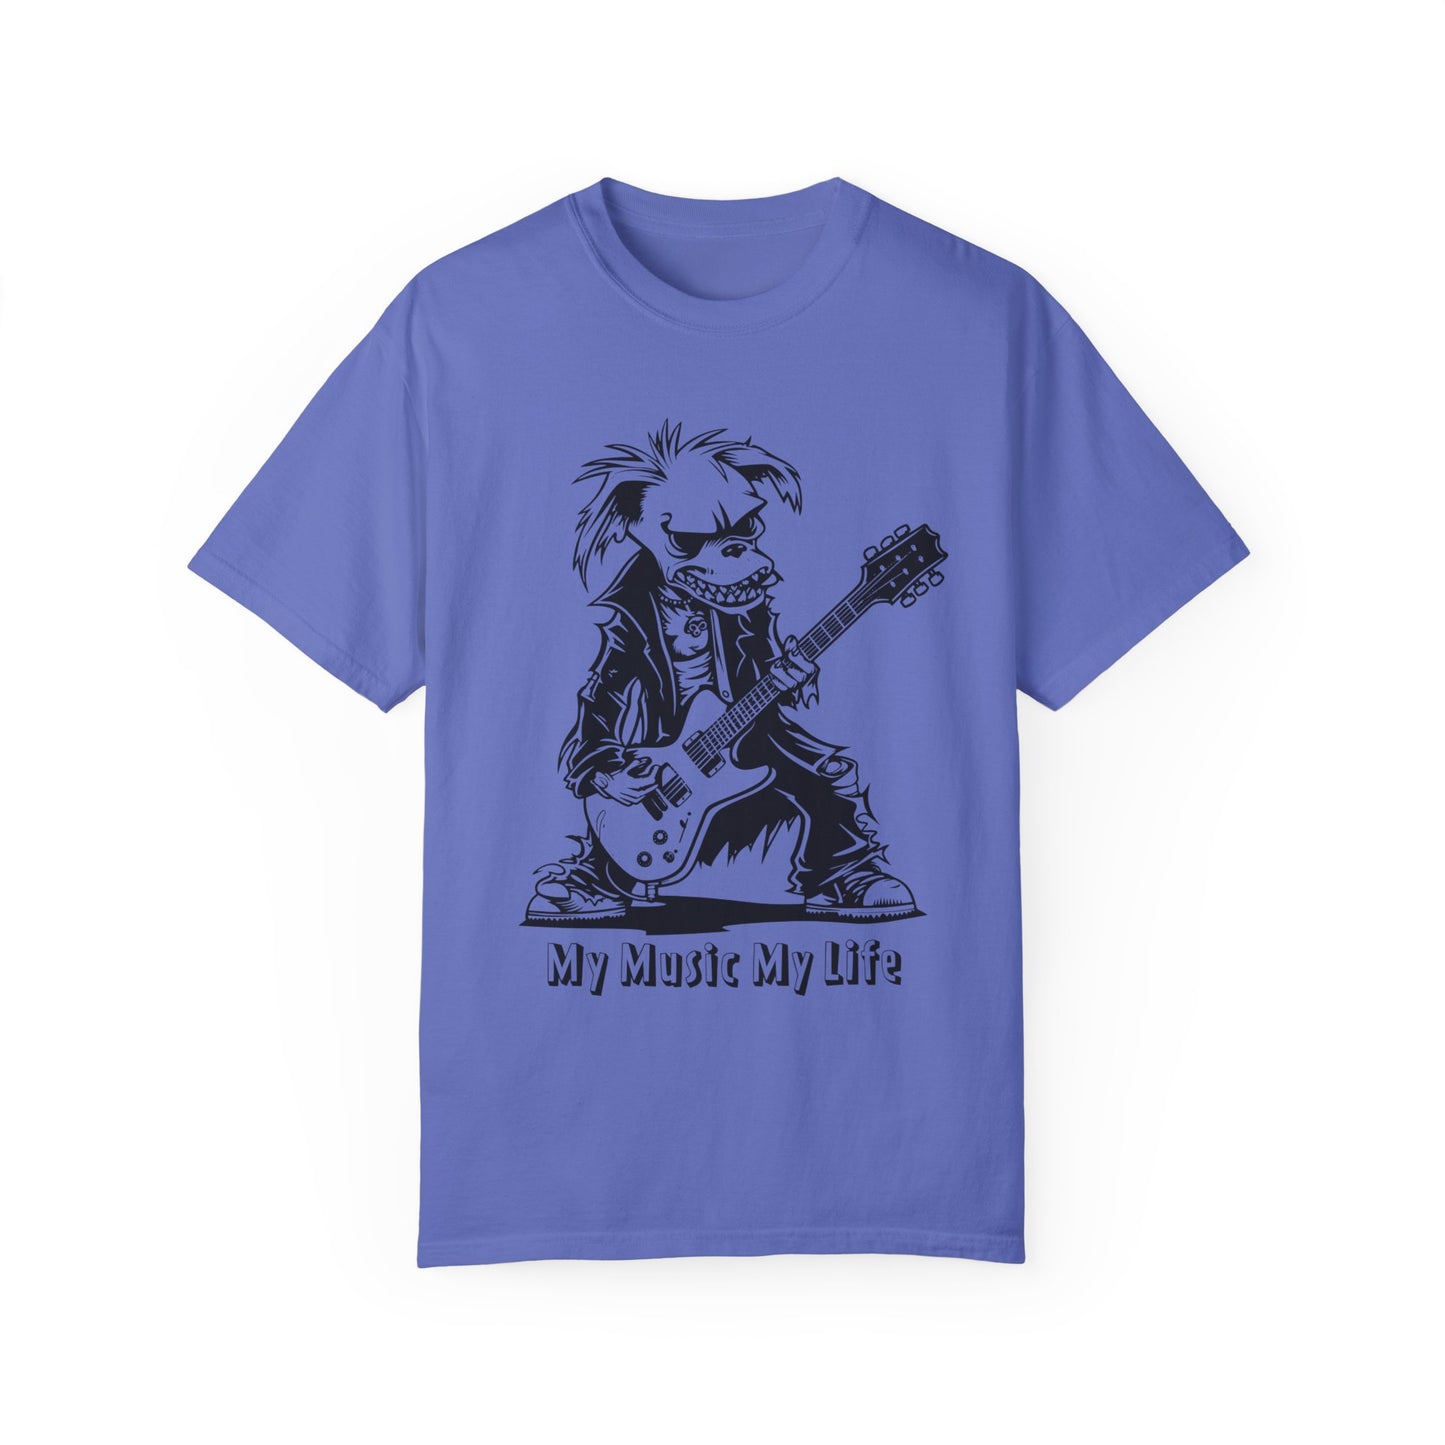 Comfort Colors Music Shirt, Music Party Shirt, Music Festival T-Shirt, Dog plays Guitar Shirt, Funny Dog Shirt, Pet Lover Shirt, Music Tee